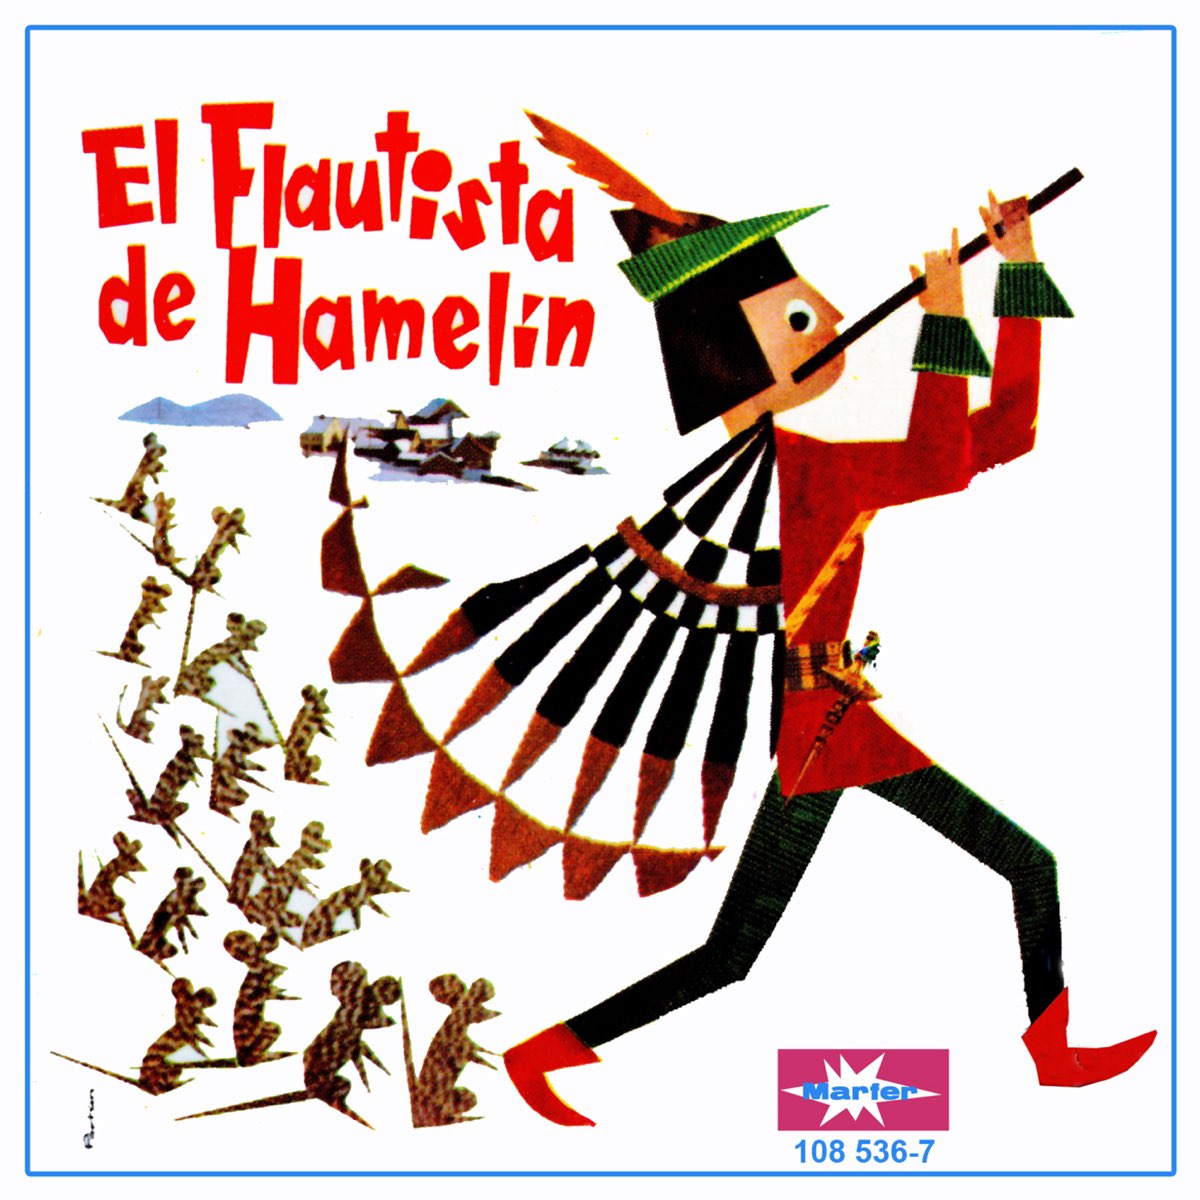 El Flautista de Hamelin - Single - Album by El Flautista de Hamelin - Apple  Music